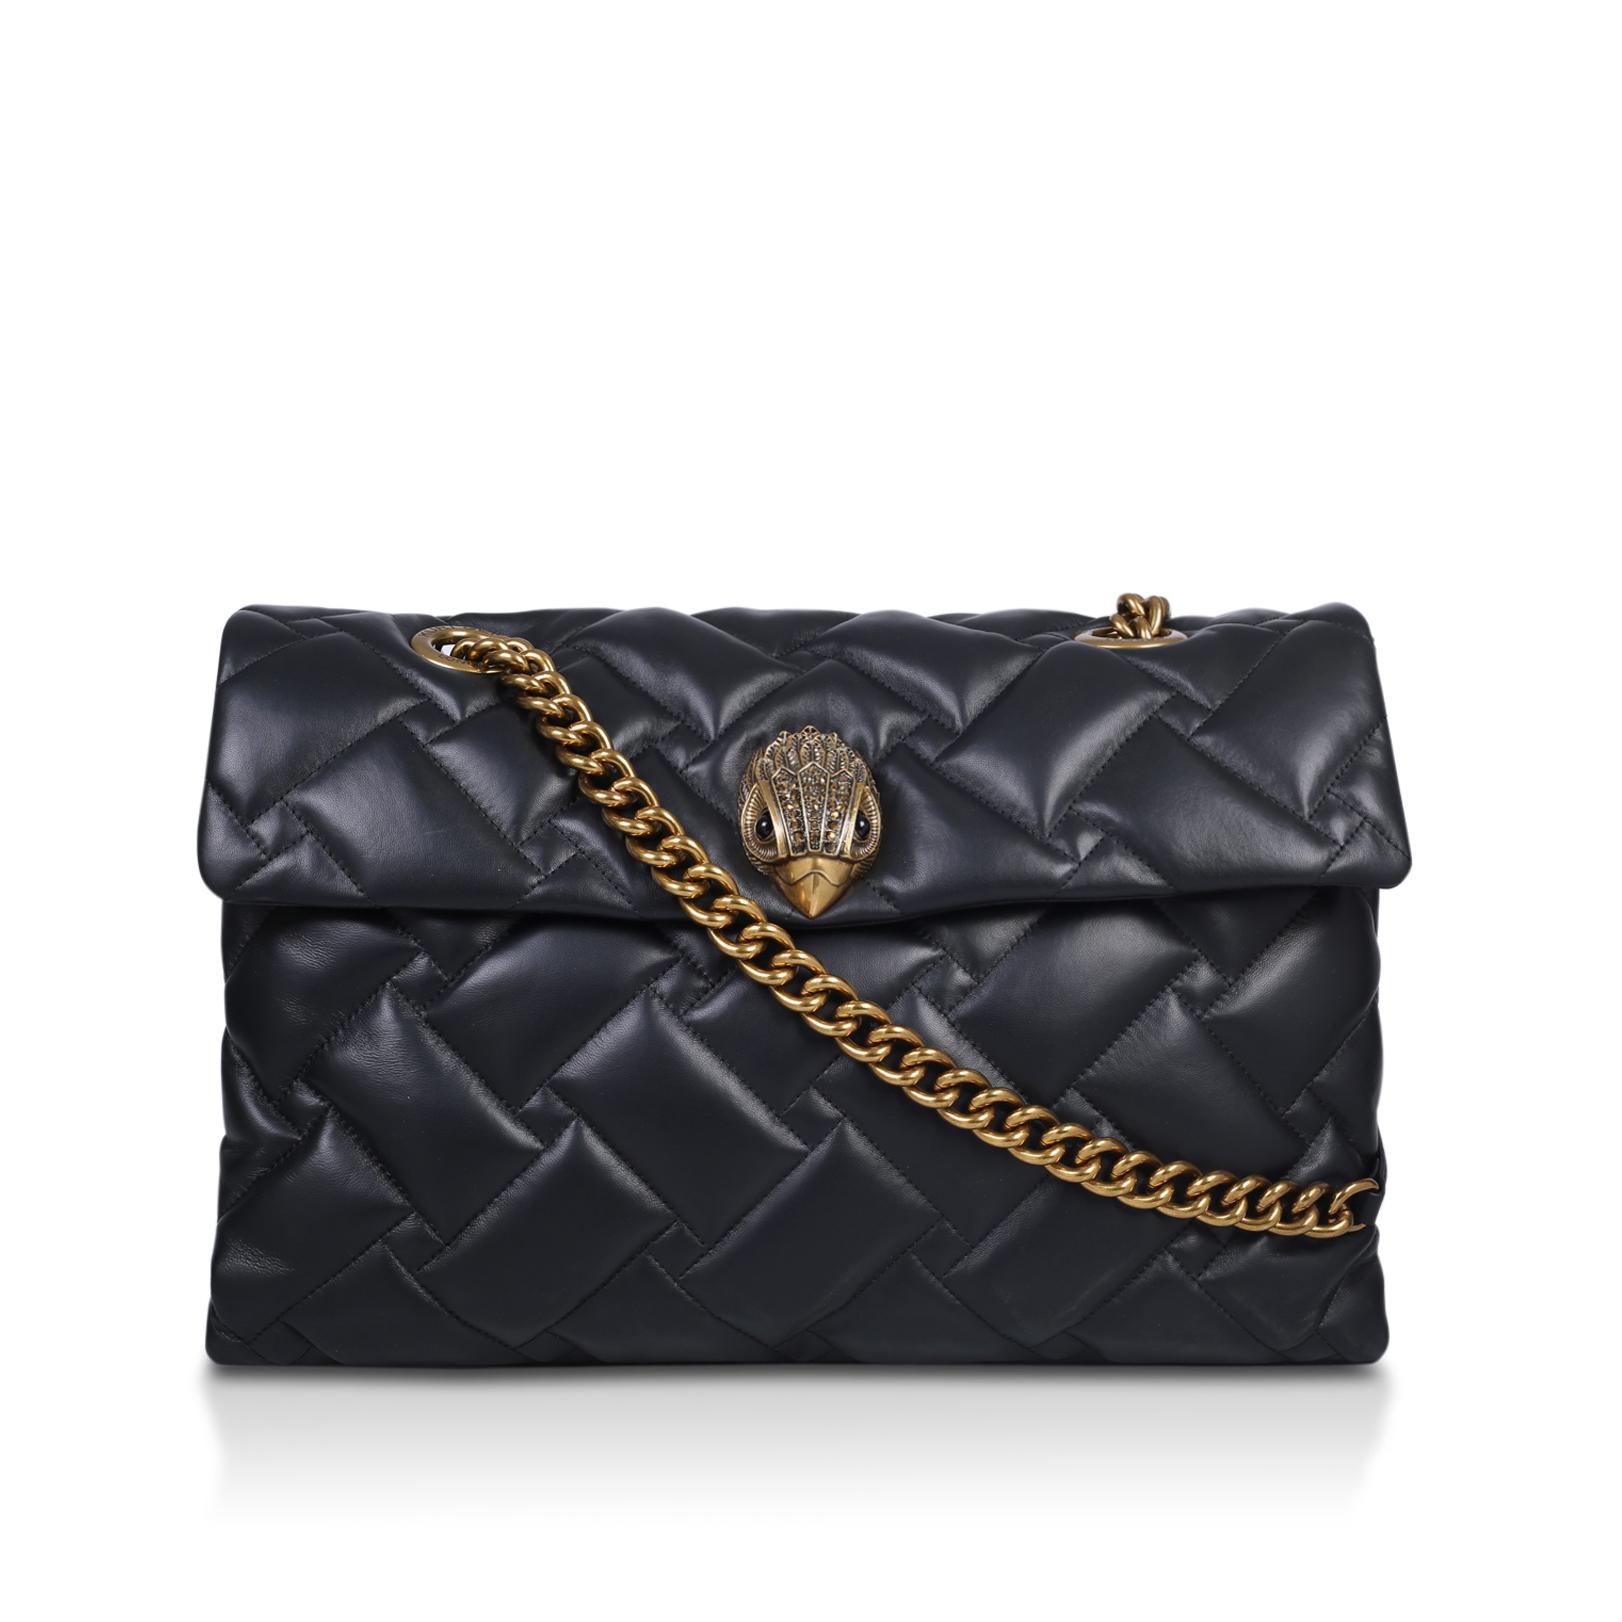 Macro Kensington Soft Bag Black Quilted Leather Oversized Bag By Kurt ...